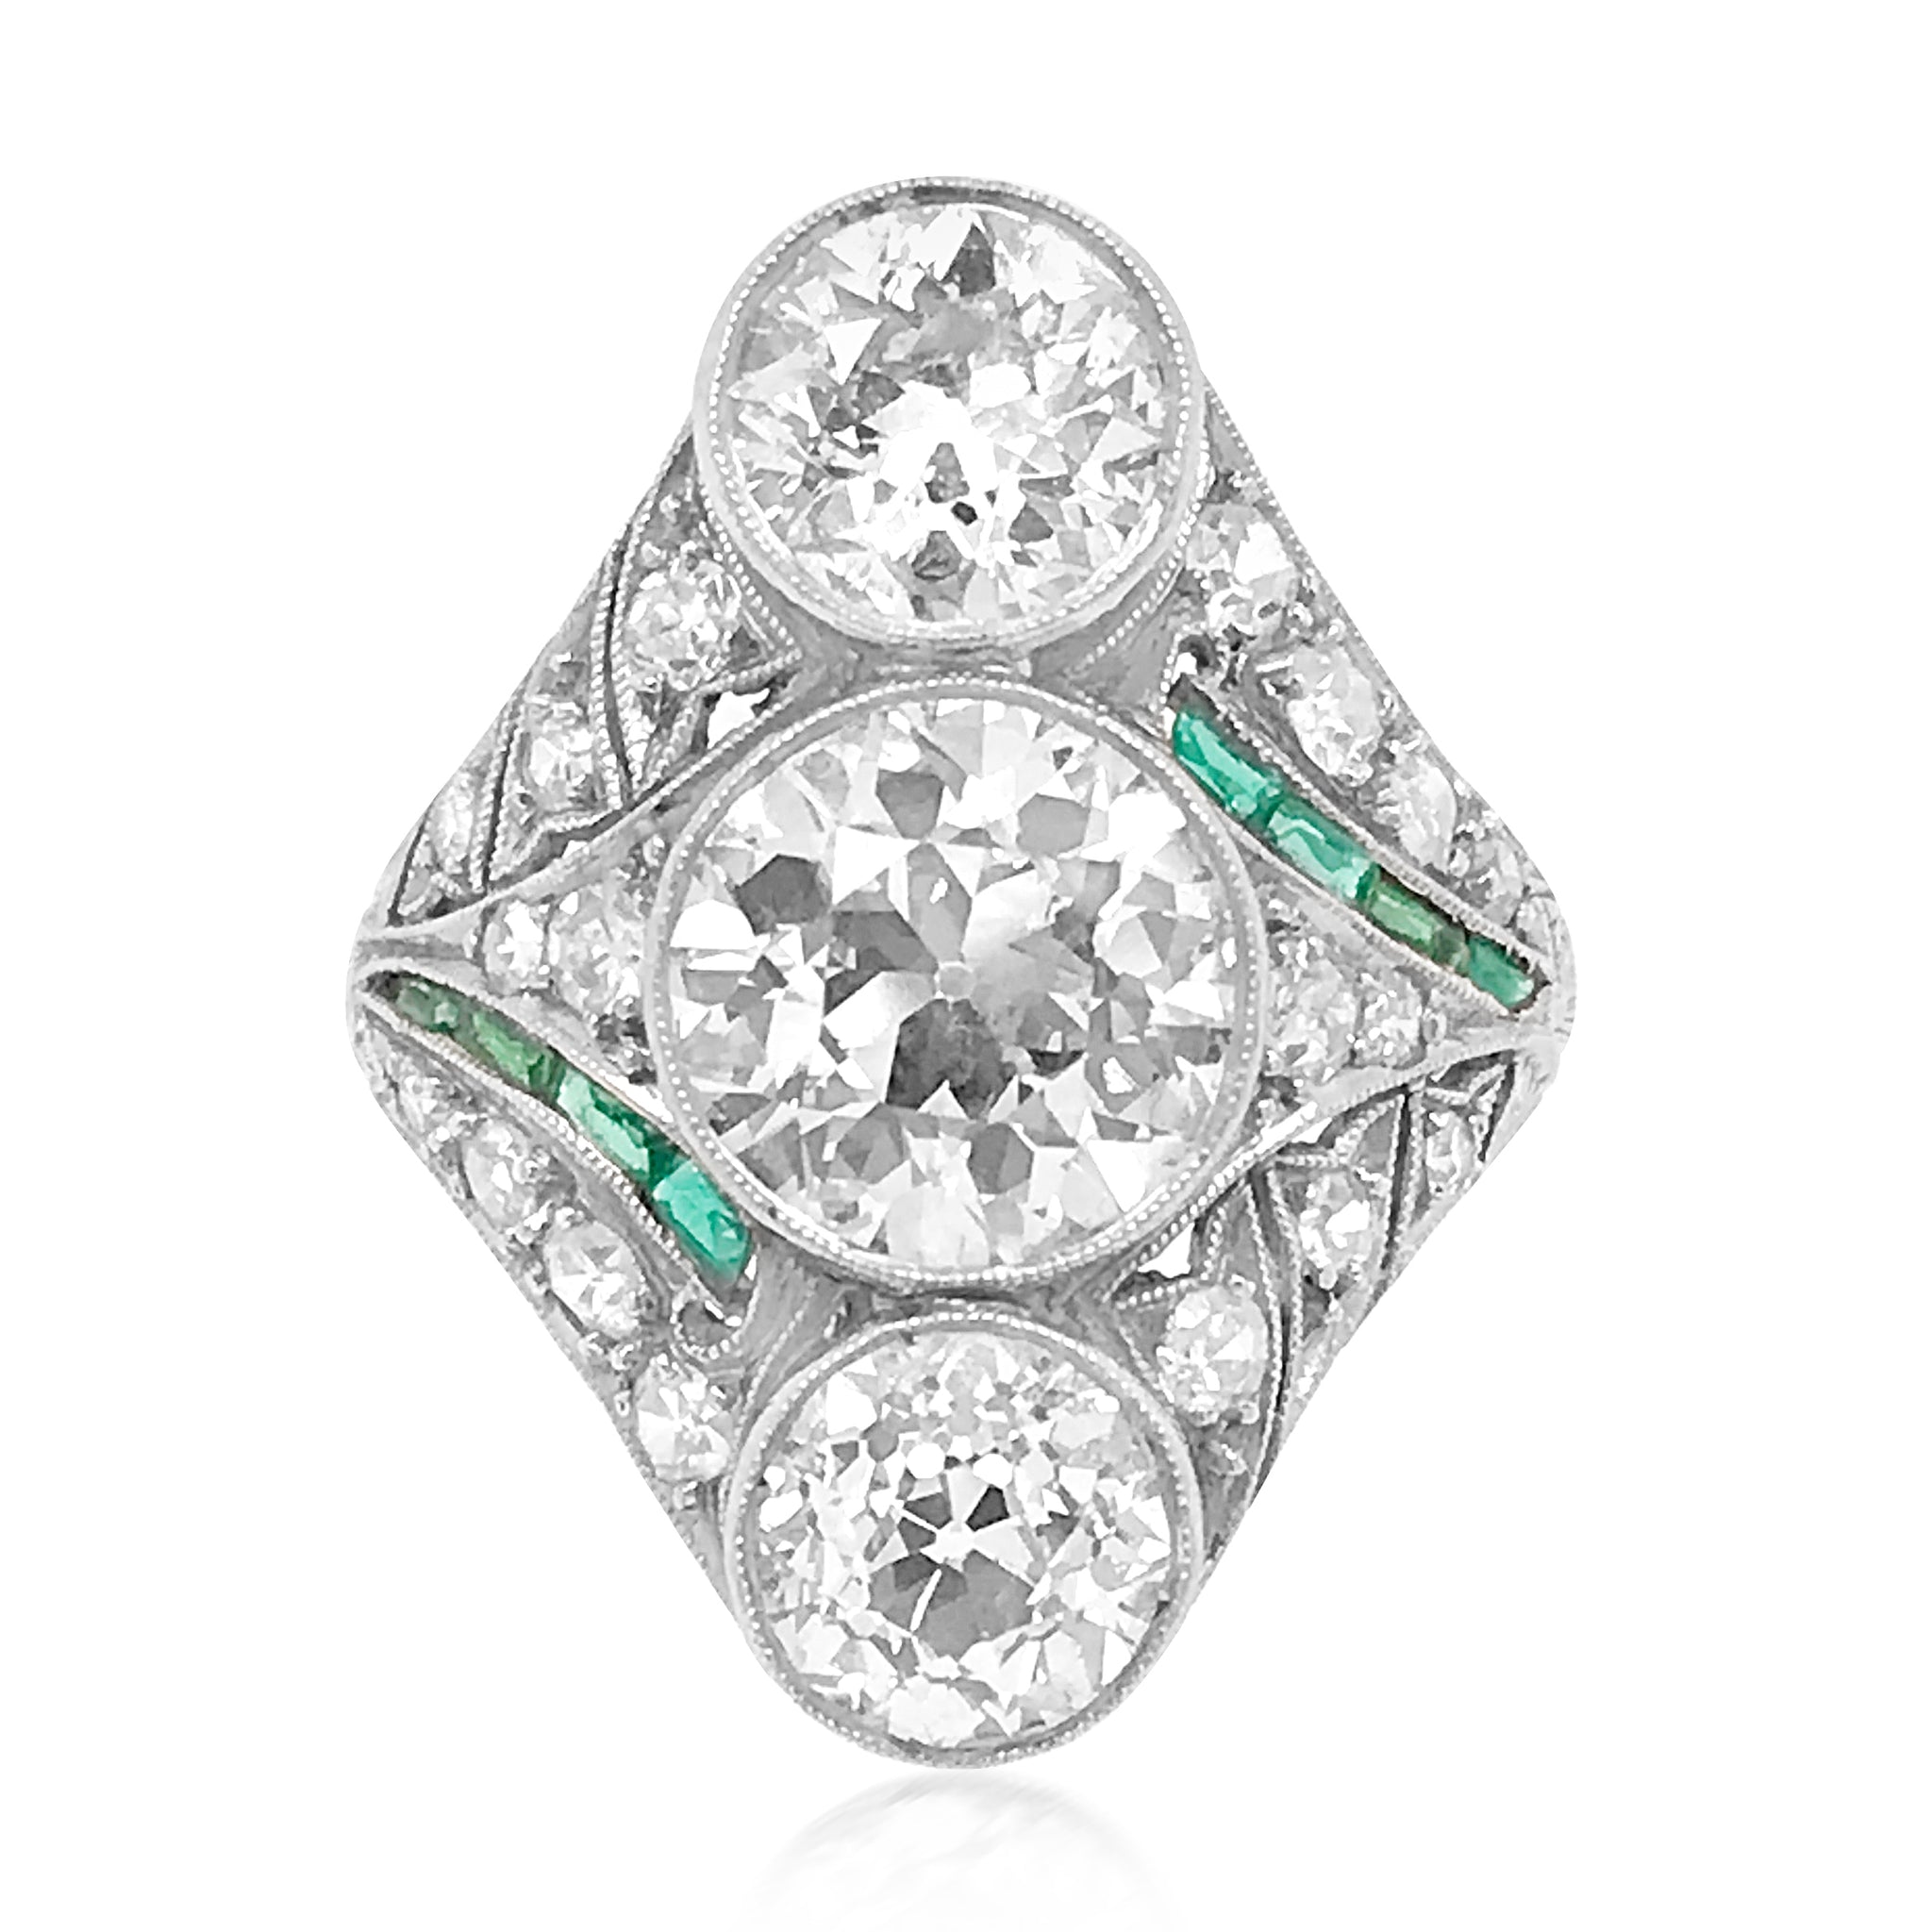 Edwardian Three Diamond Ring - Lueur Jewelry